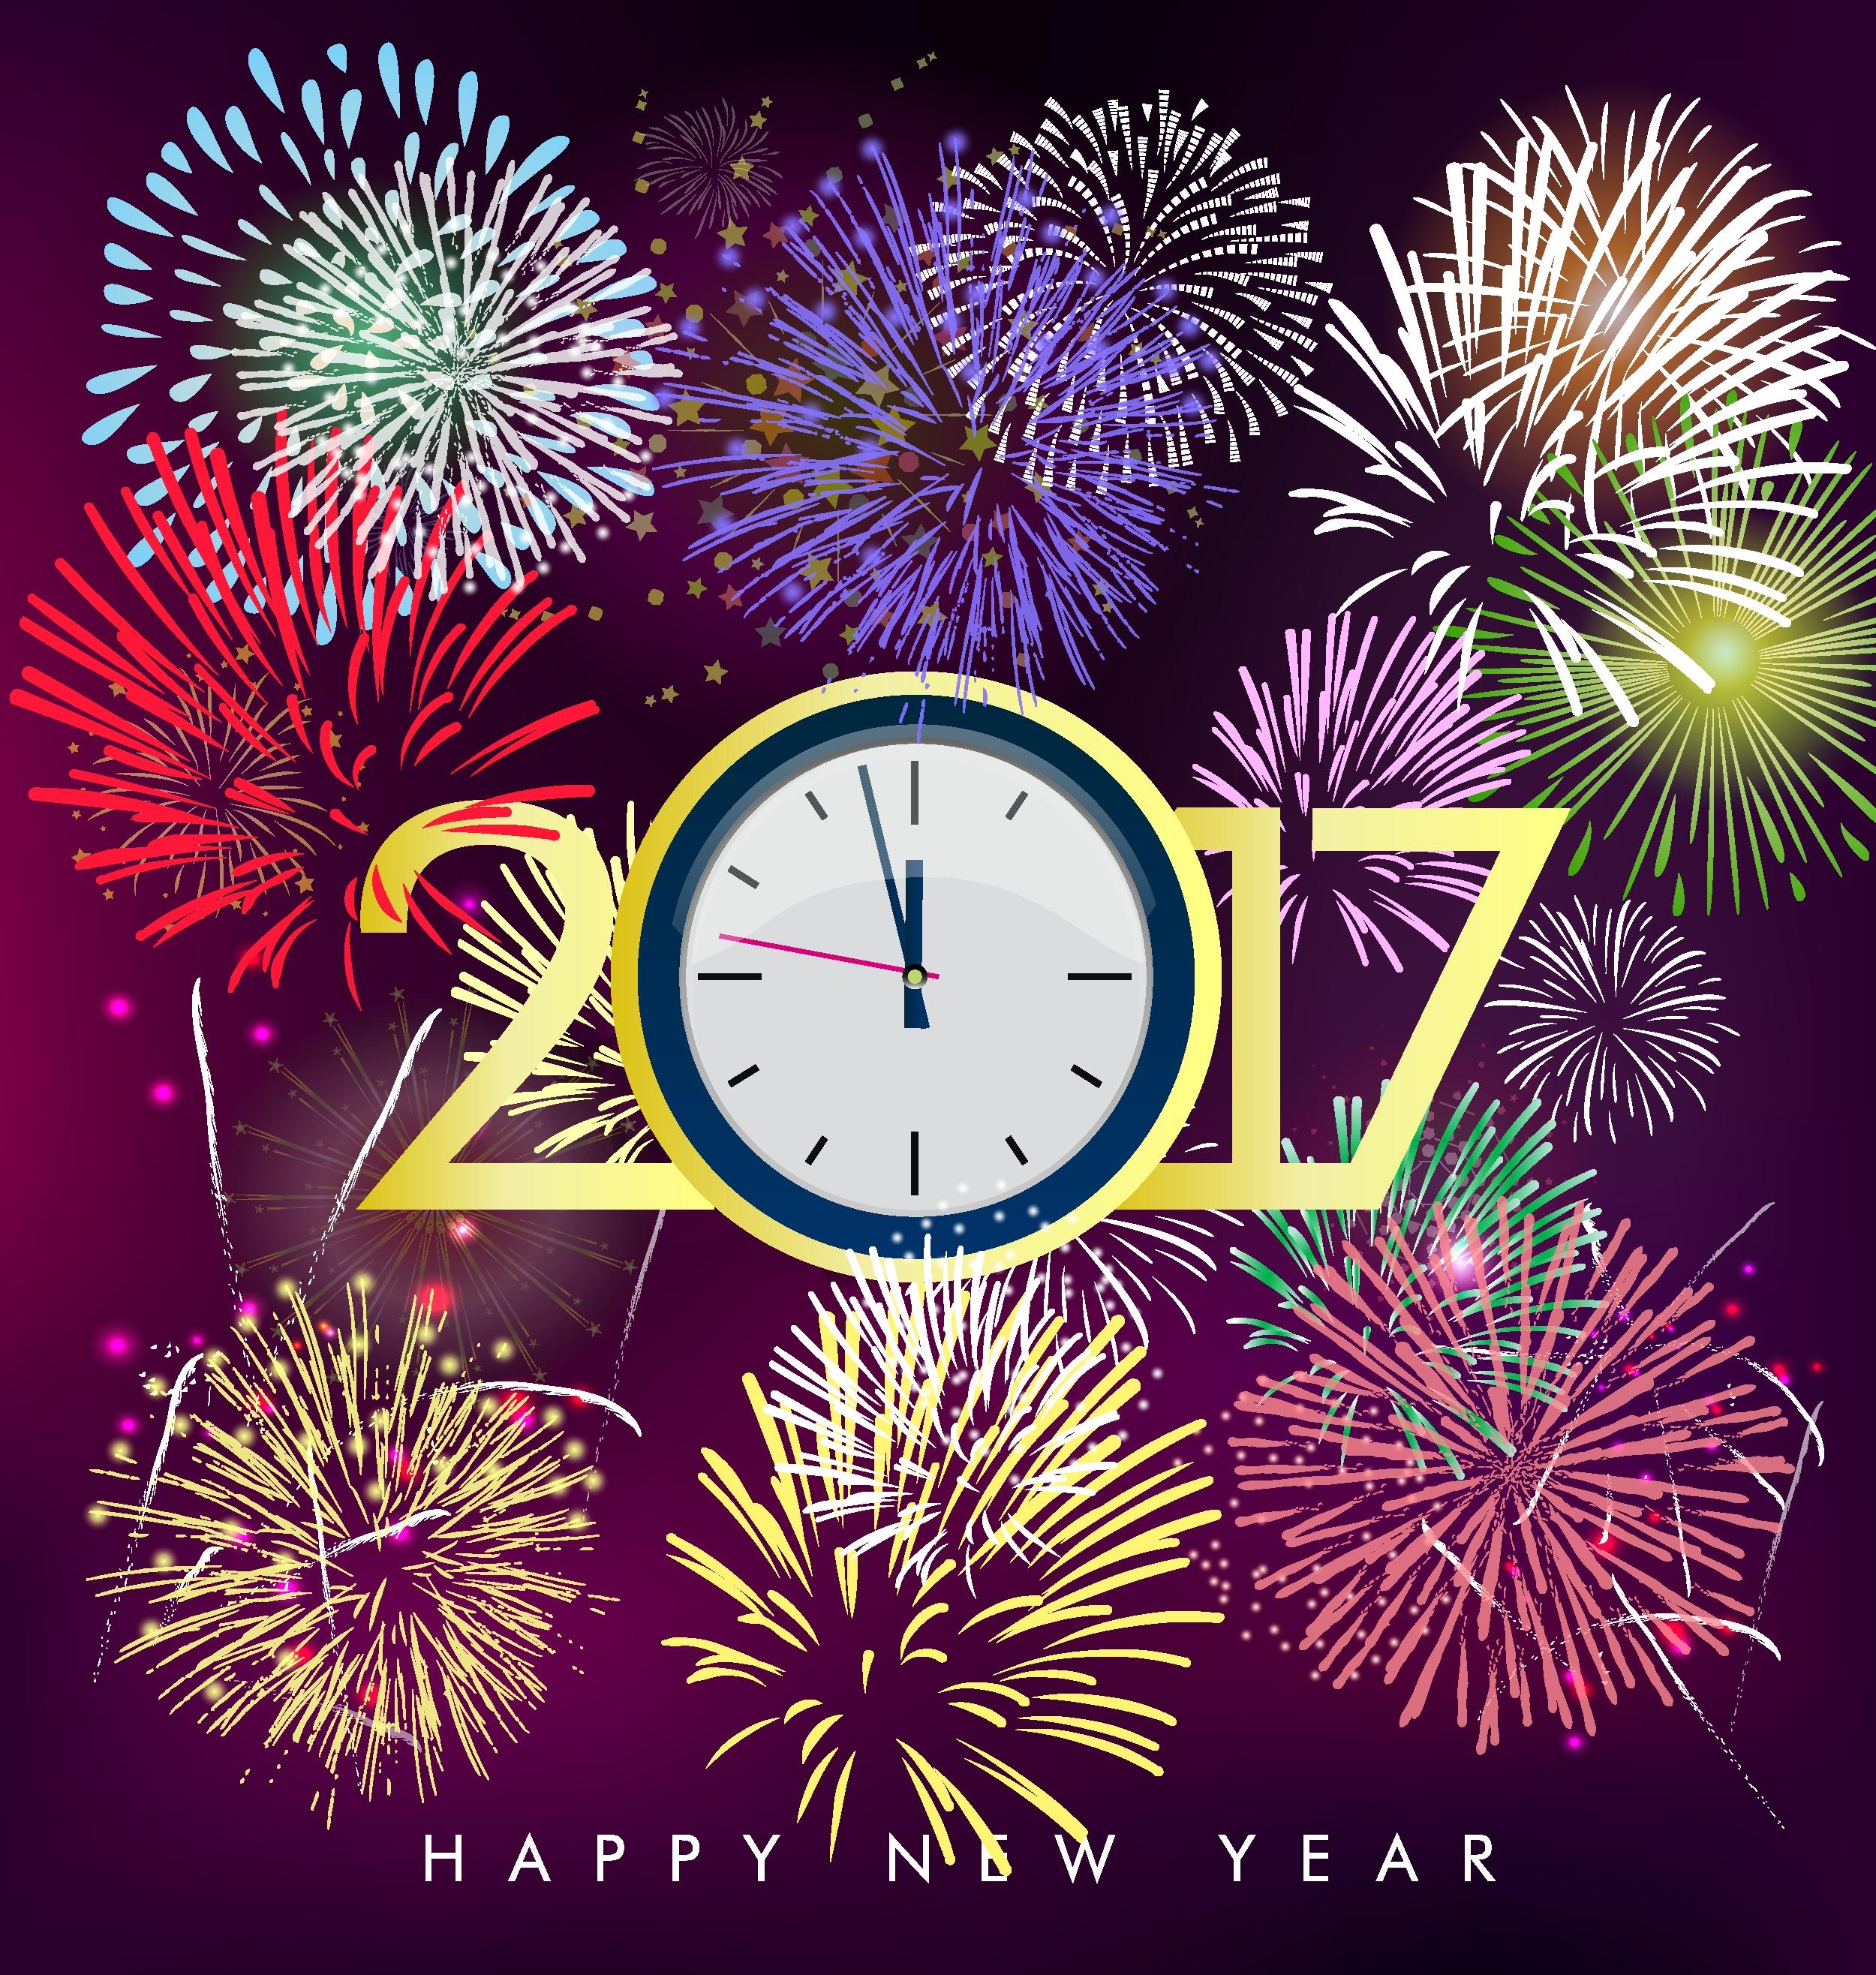 Wallpapers New Year Happy New Year 2017 Happy New Year on the desktop